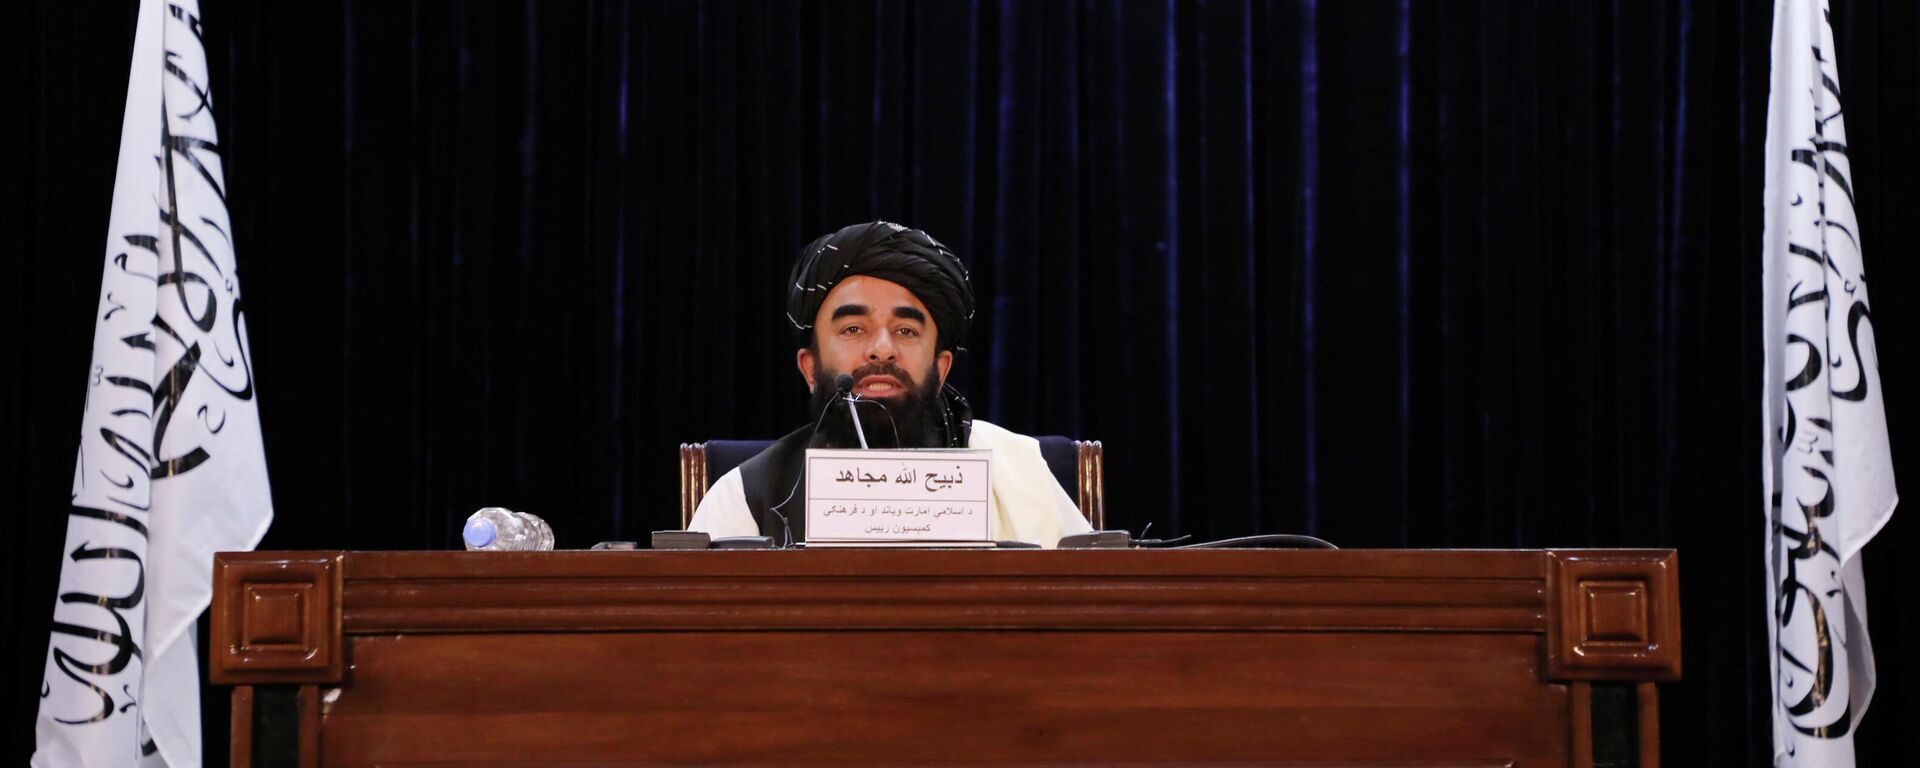 Taliban spokesman Zabihullah Mujahid speaks during a news conference in Kabul, Afghanistan September 6, 2021. REUTERS/Stringer - Sputnik International, 1920, 09.09.2021